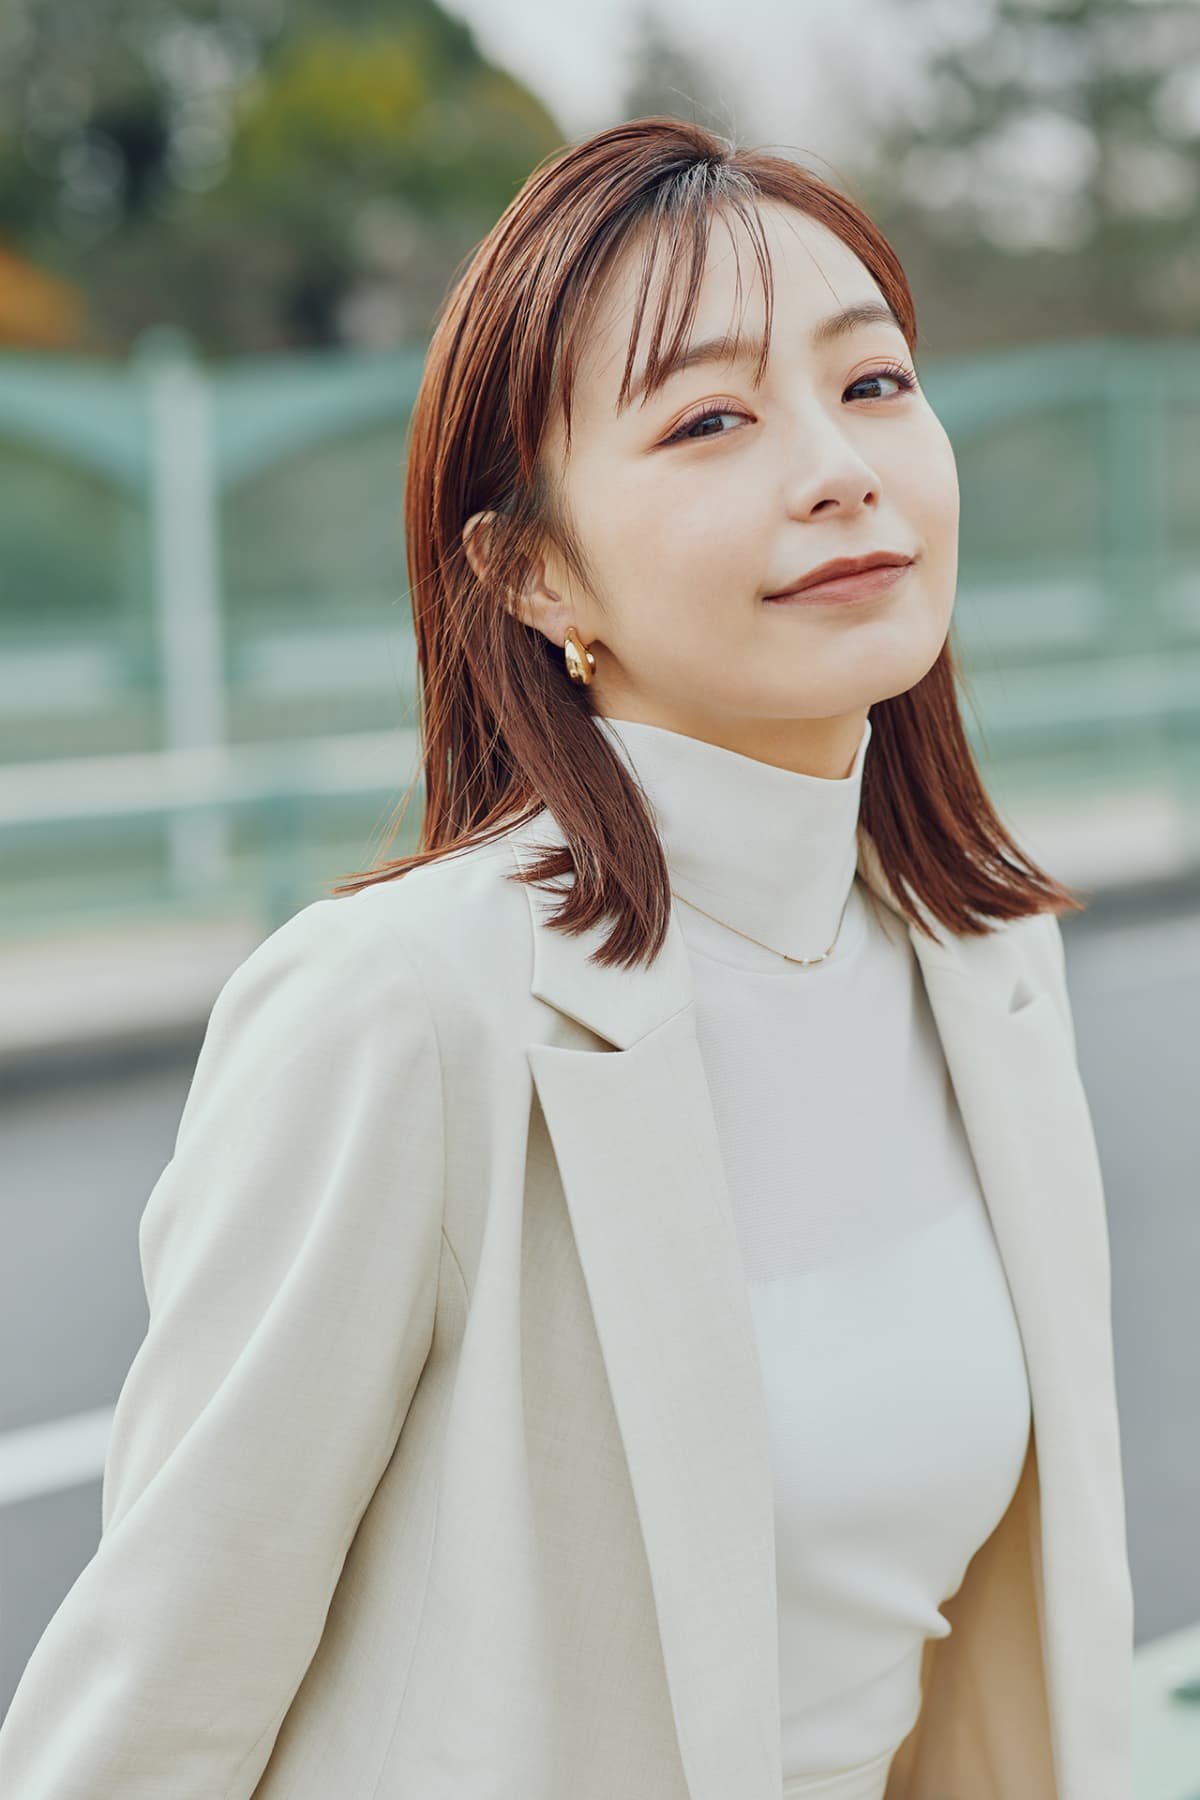 CELFORD / 우가키 미사토 / model actress